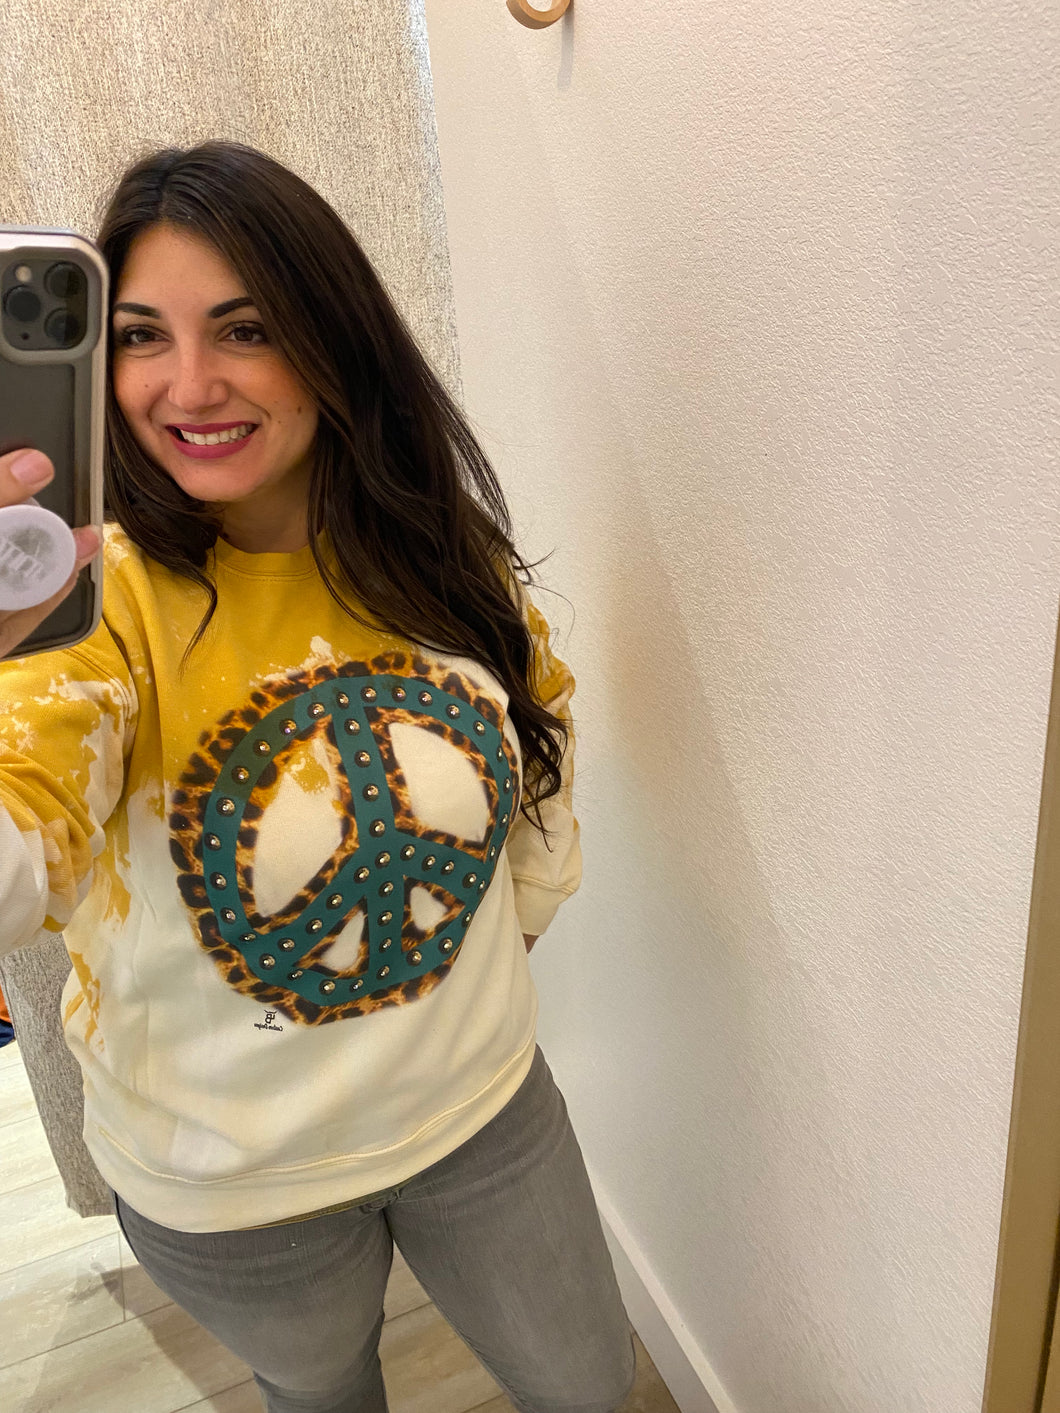 Peace sweatshirt